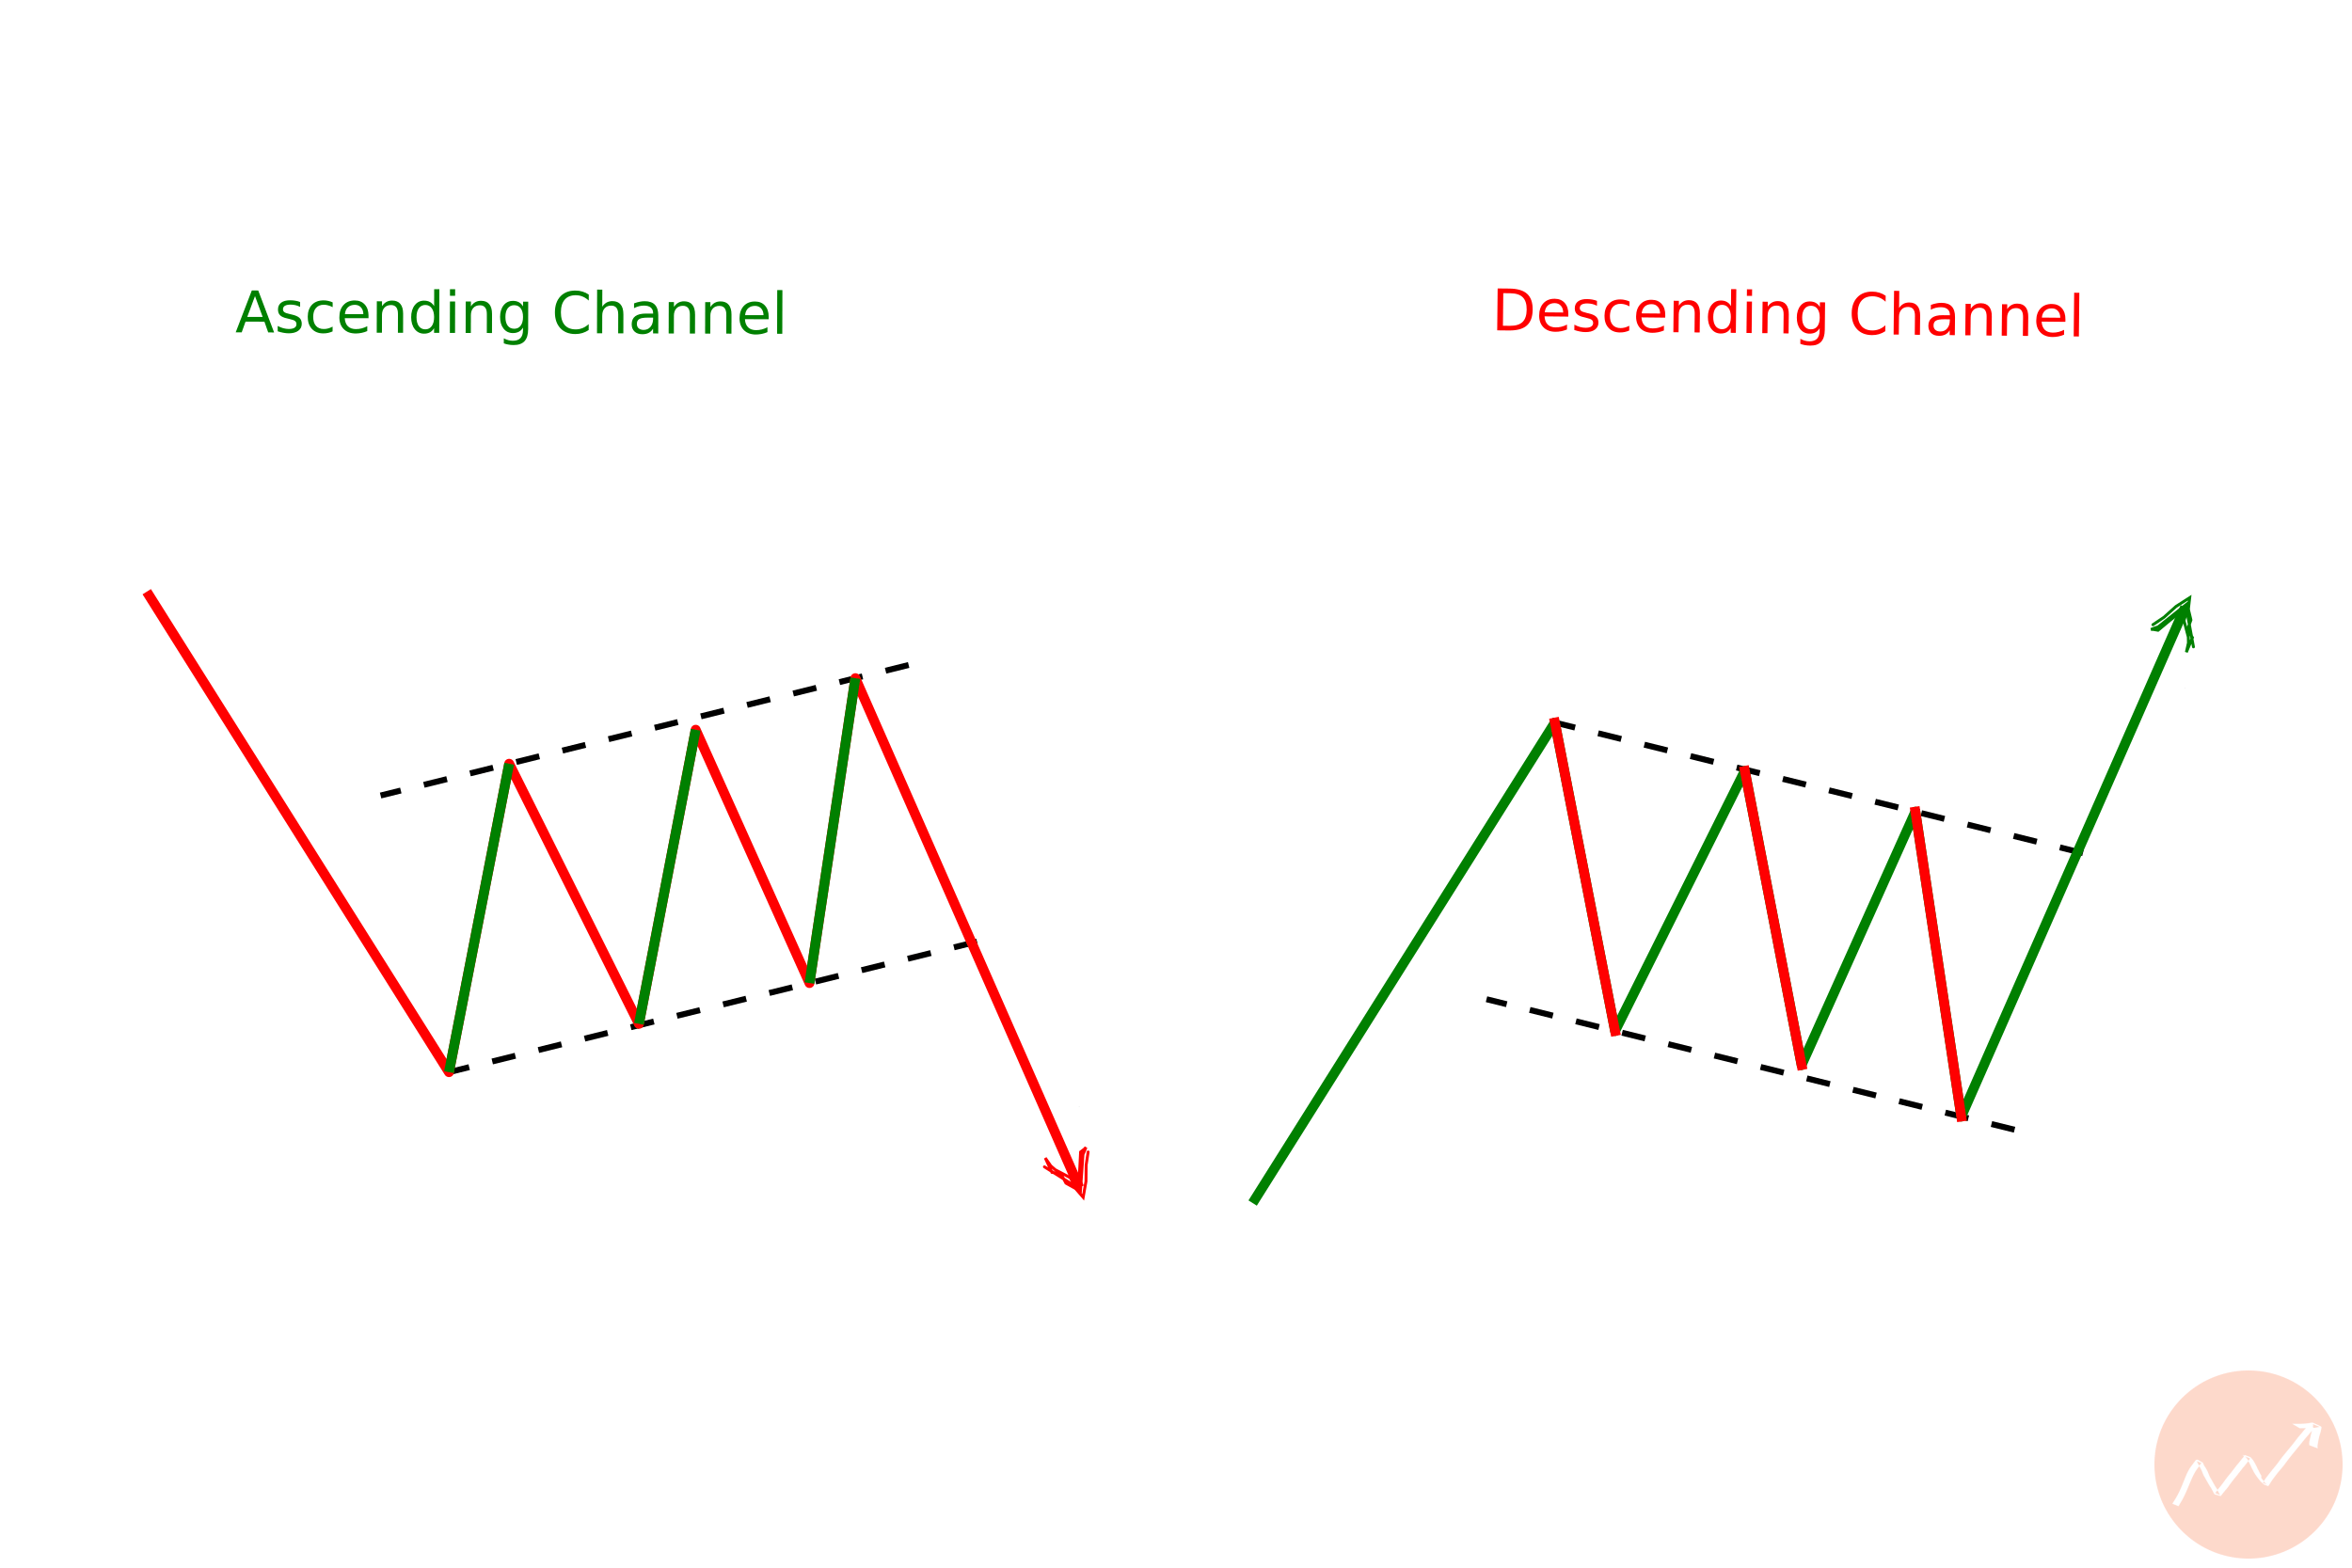 Ascending Channel and Descending Channel